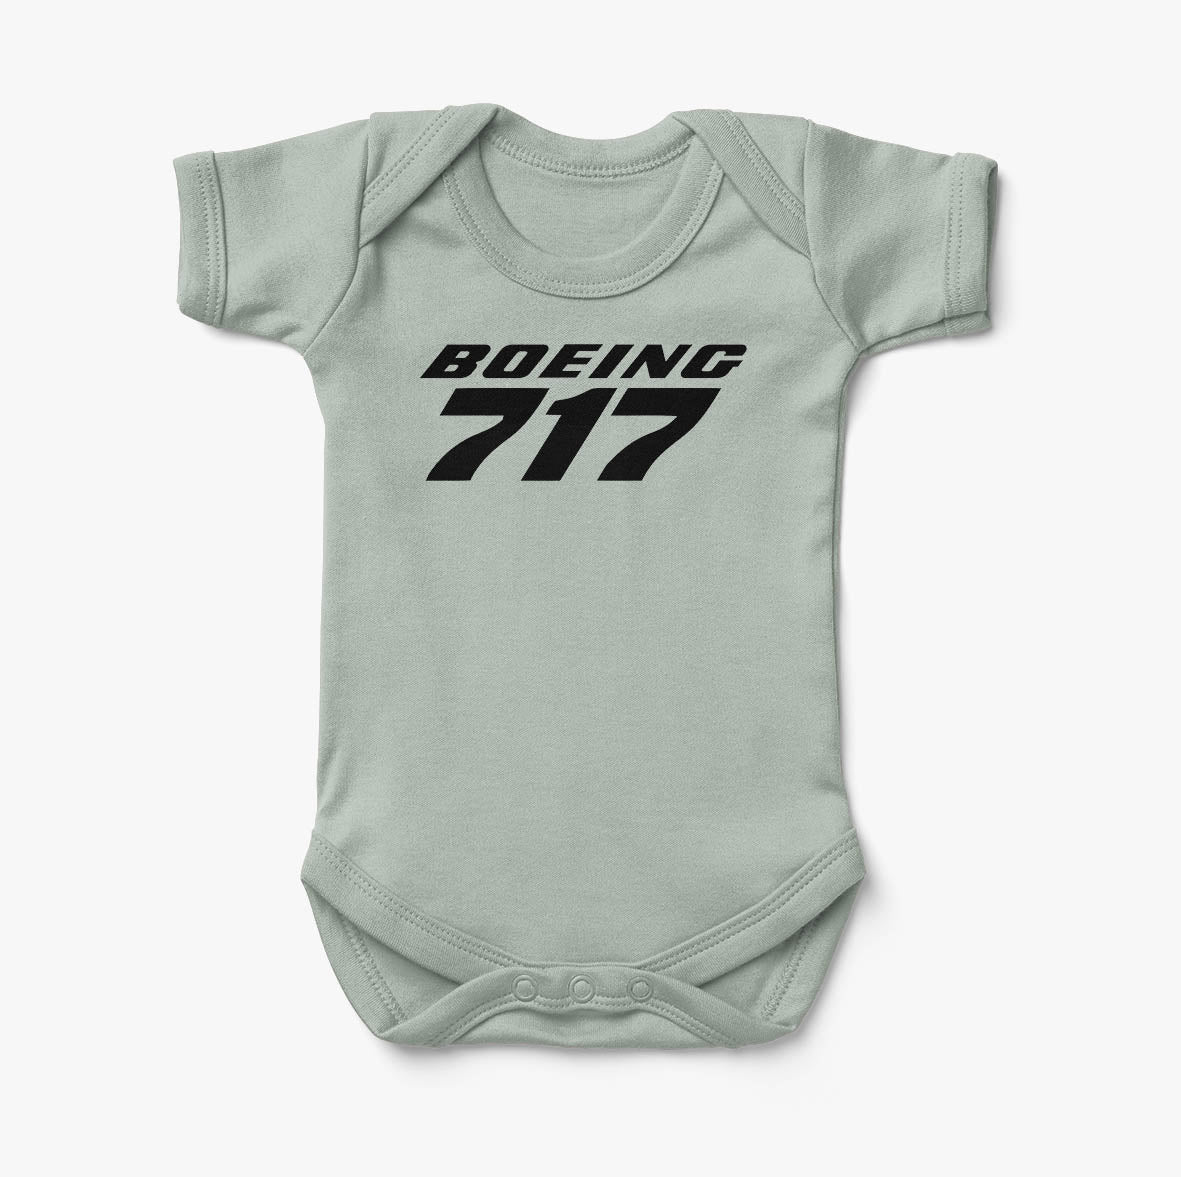 Boeing 717 & Text Designed Baby Bodysuits